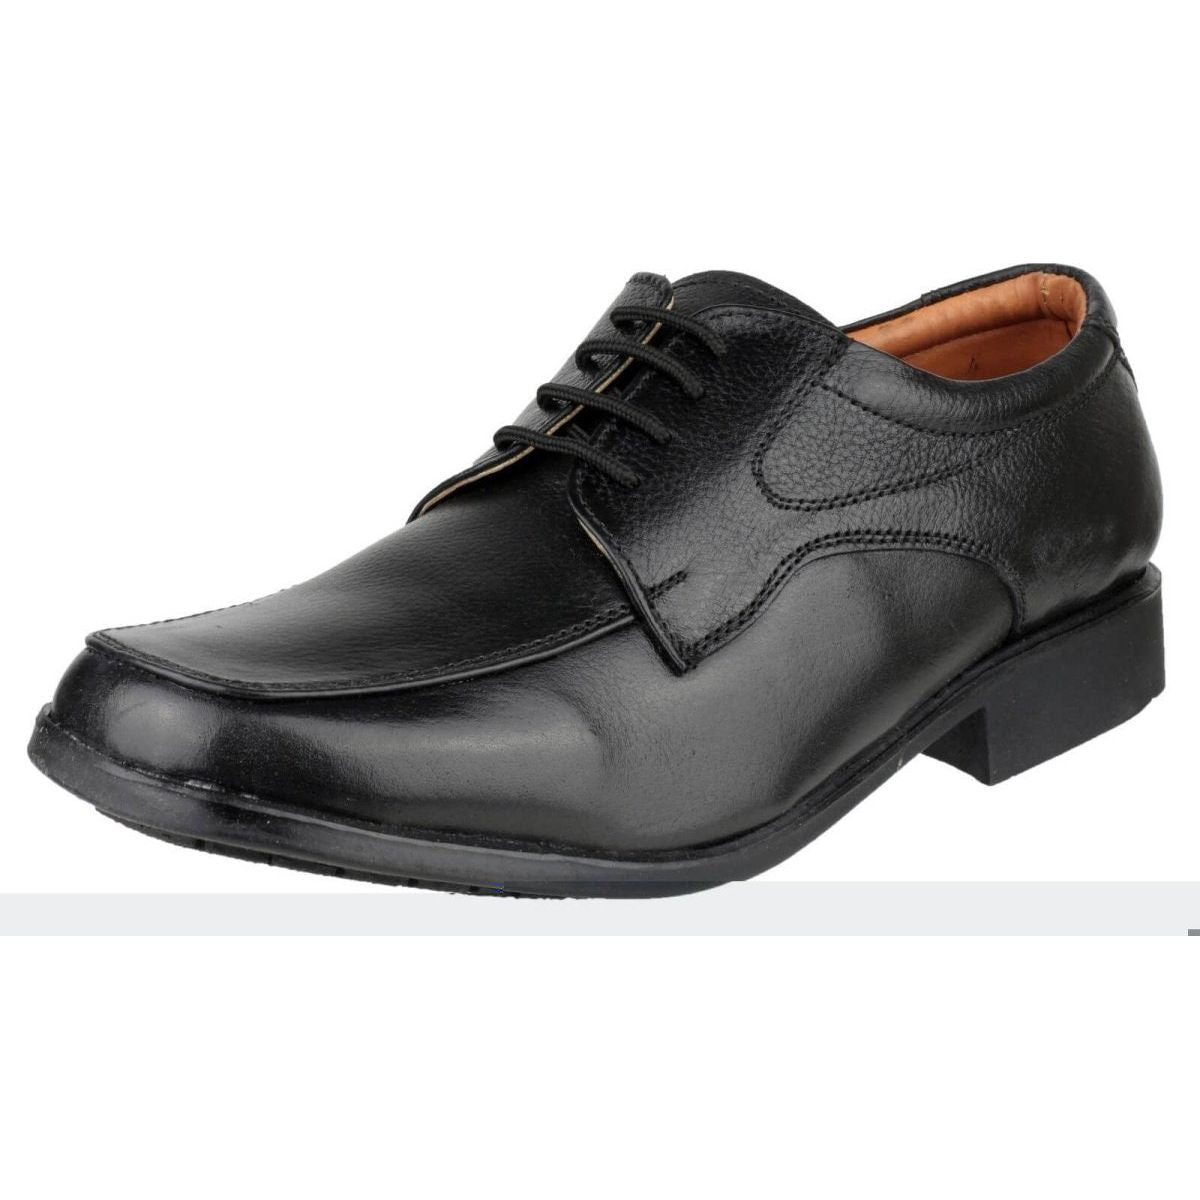 Amblers Birmingham Gibson Shoes Mens - workweargurus.com